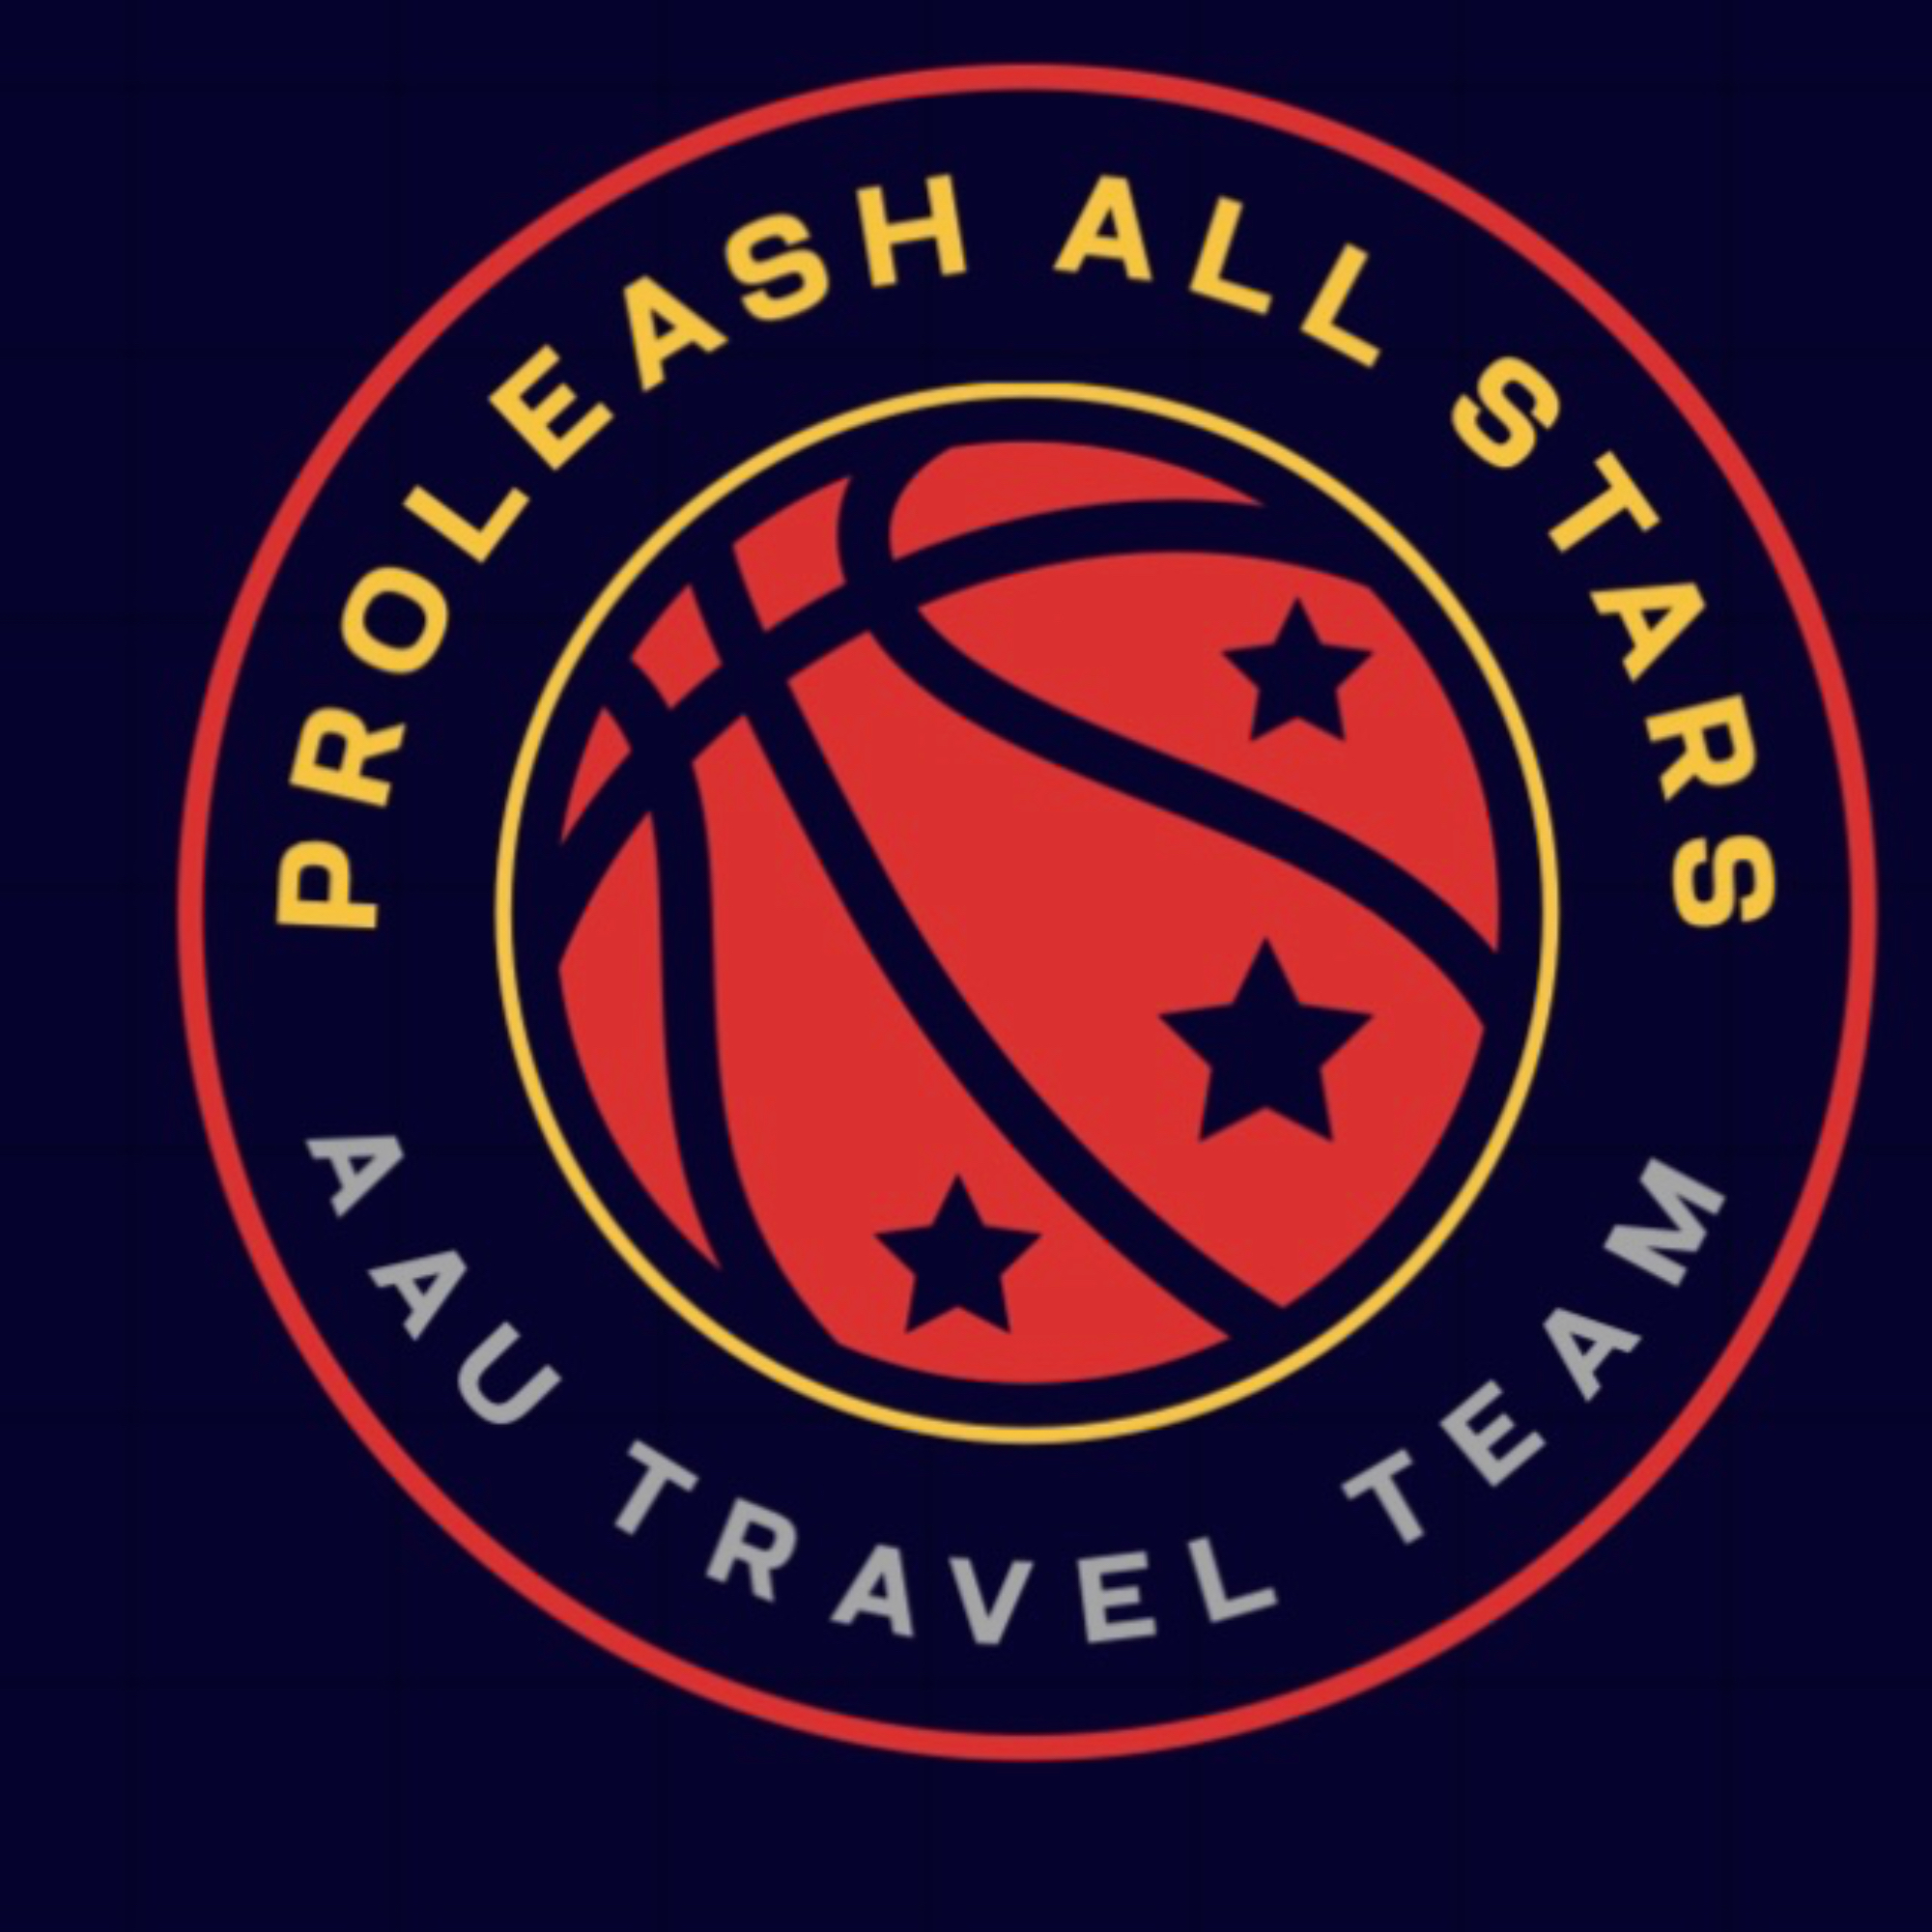 Organization logo for Proleash Allstars